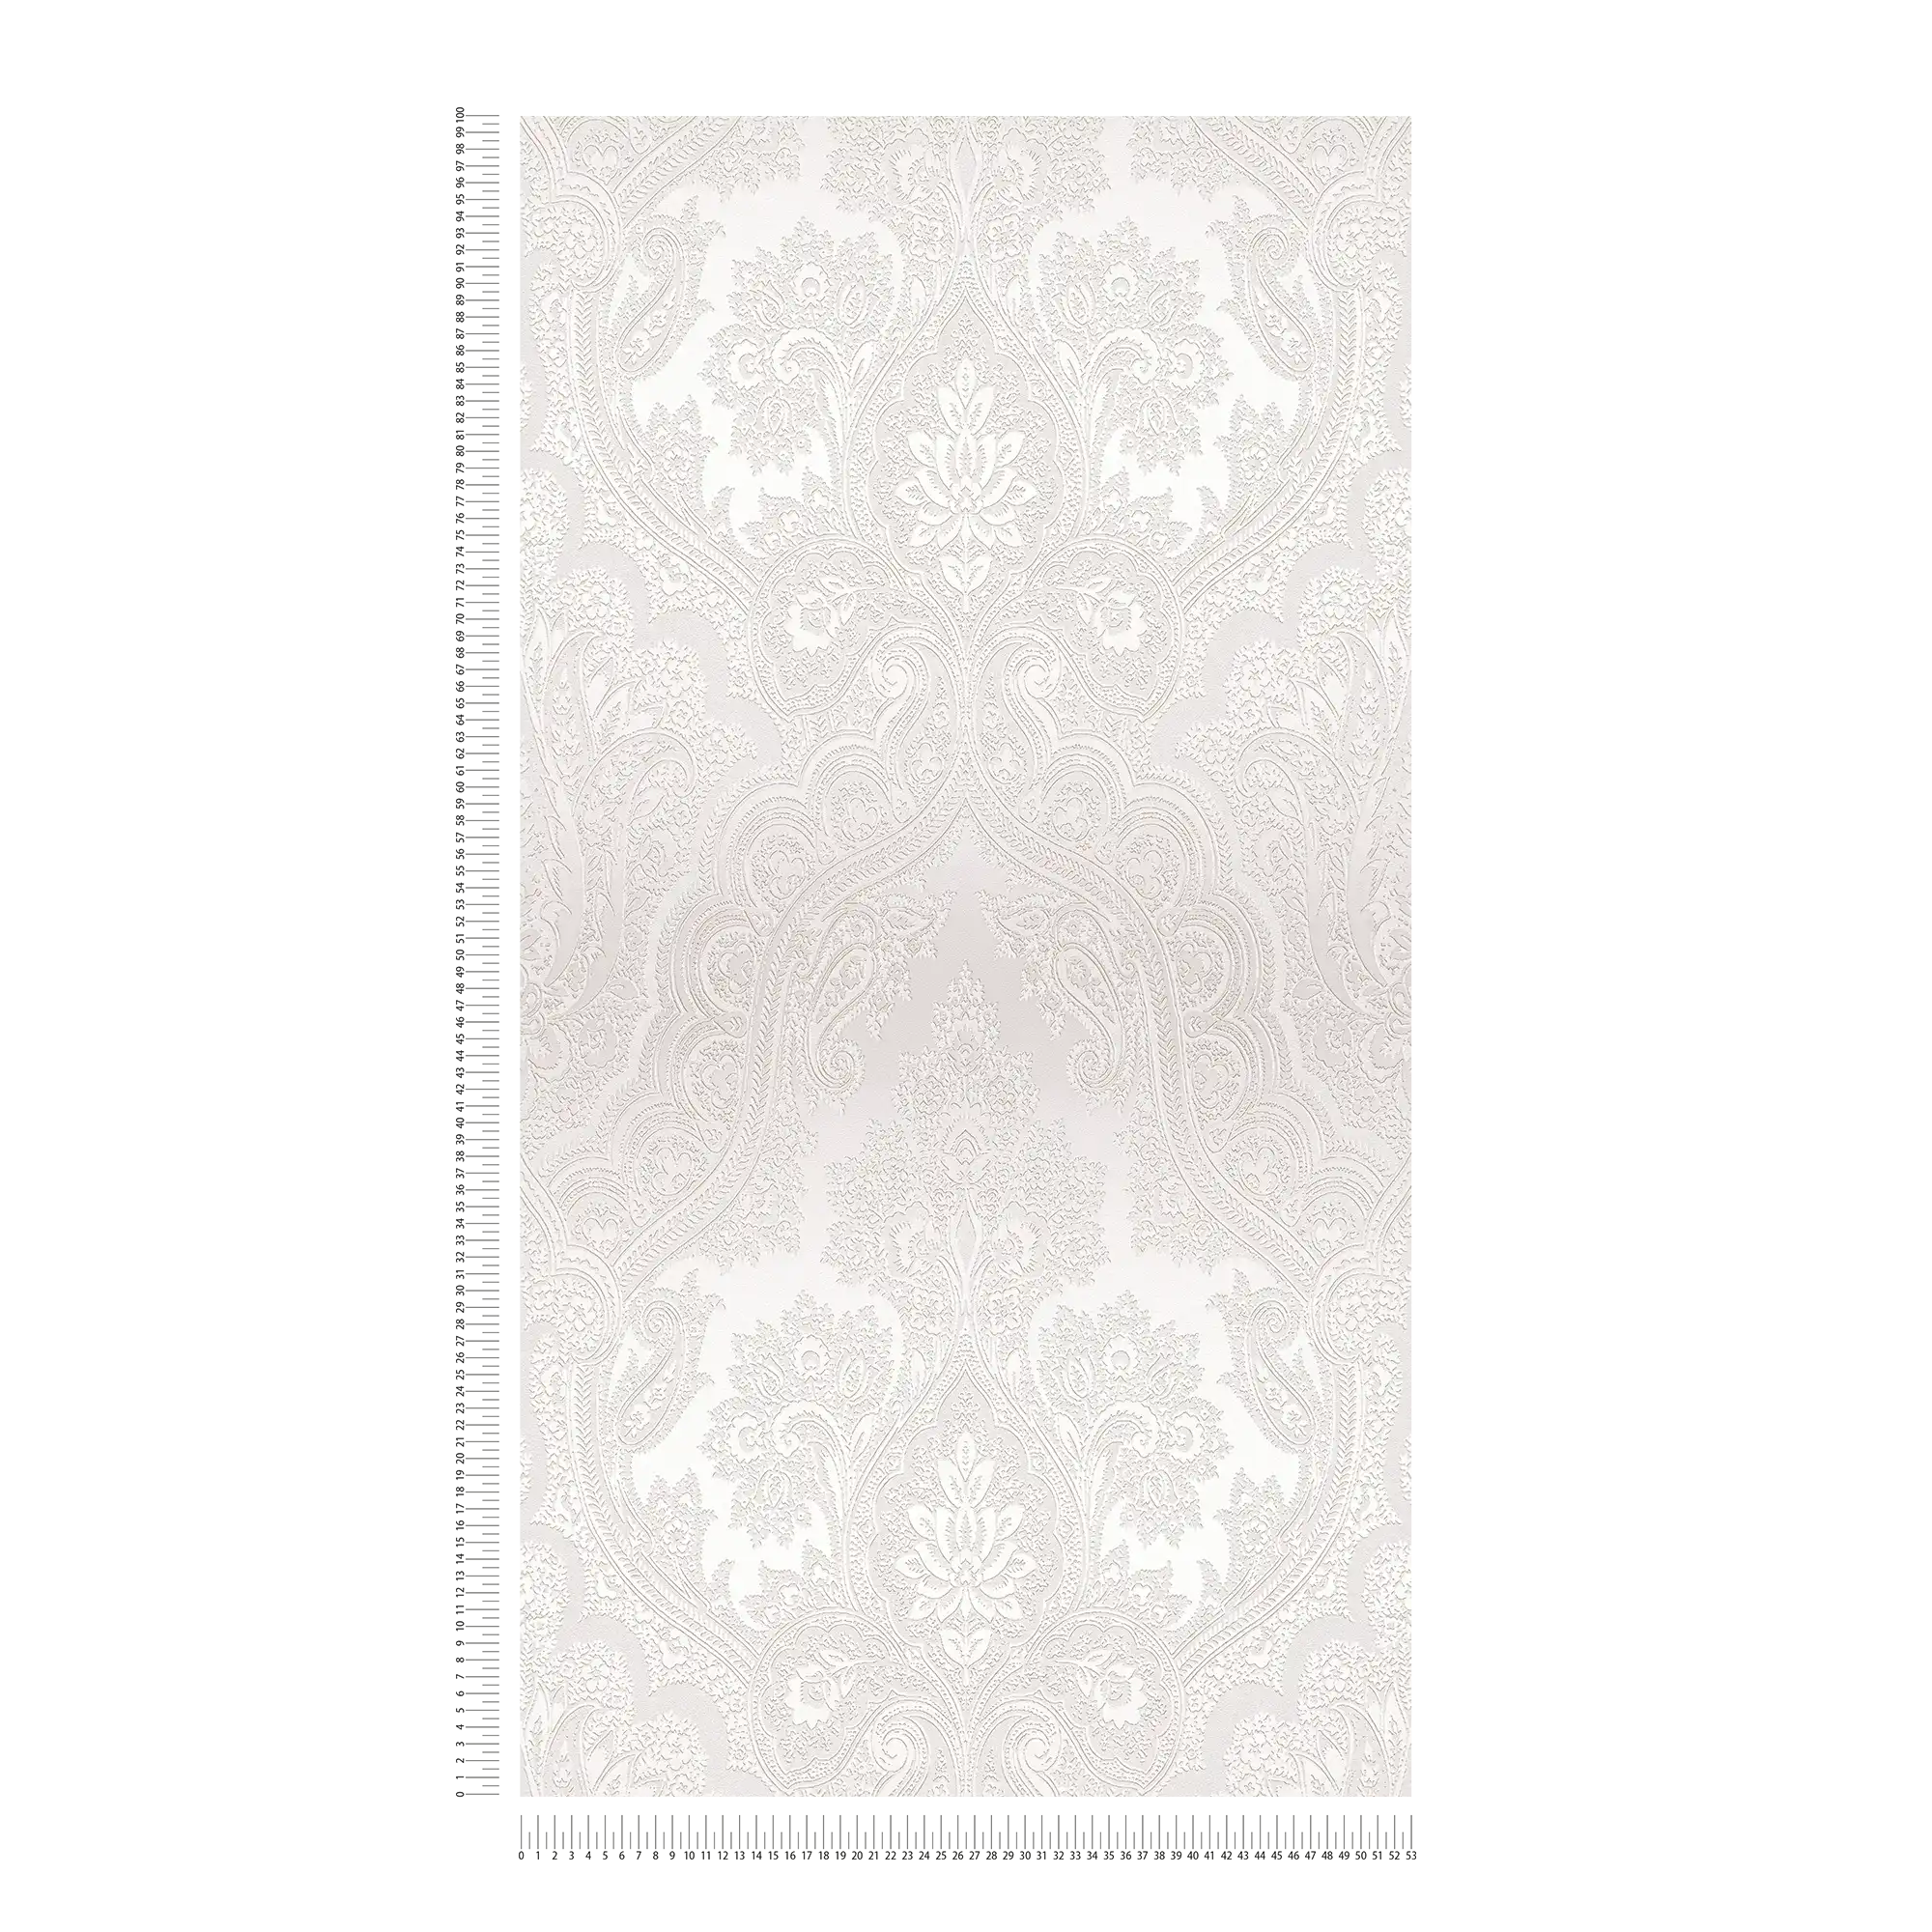             Silbergraue Tapete mit Ornamentmuster im Boho Look – Metallic, Grau
        